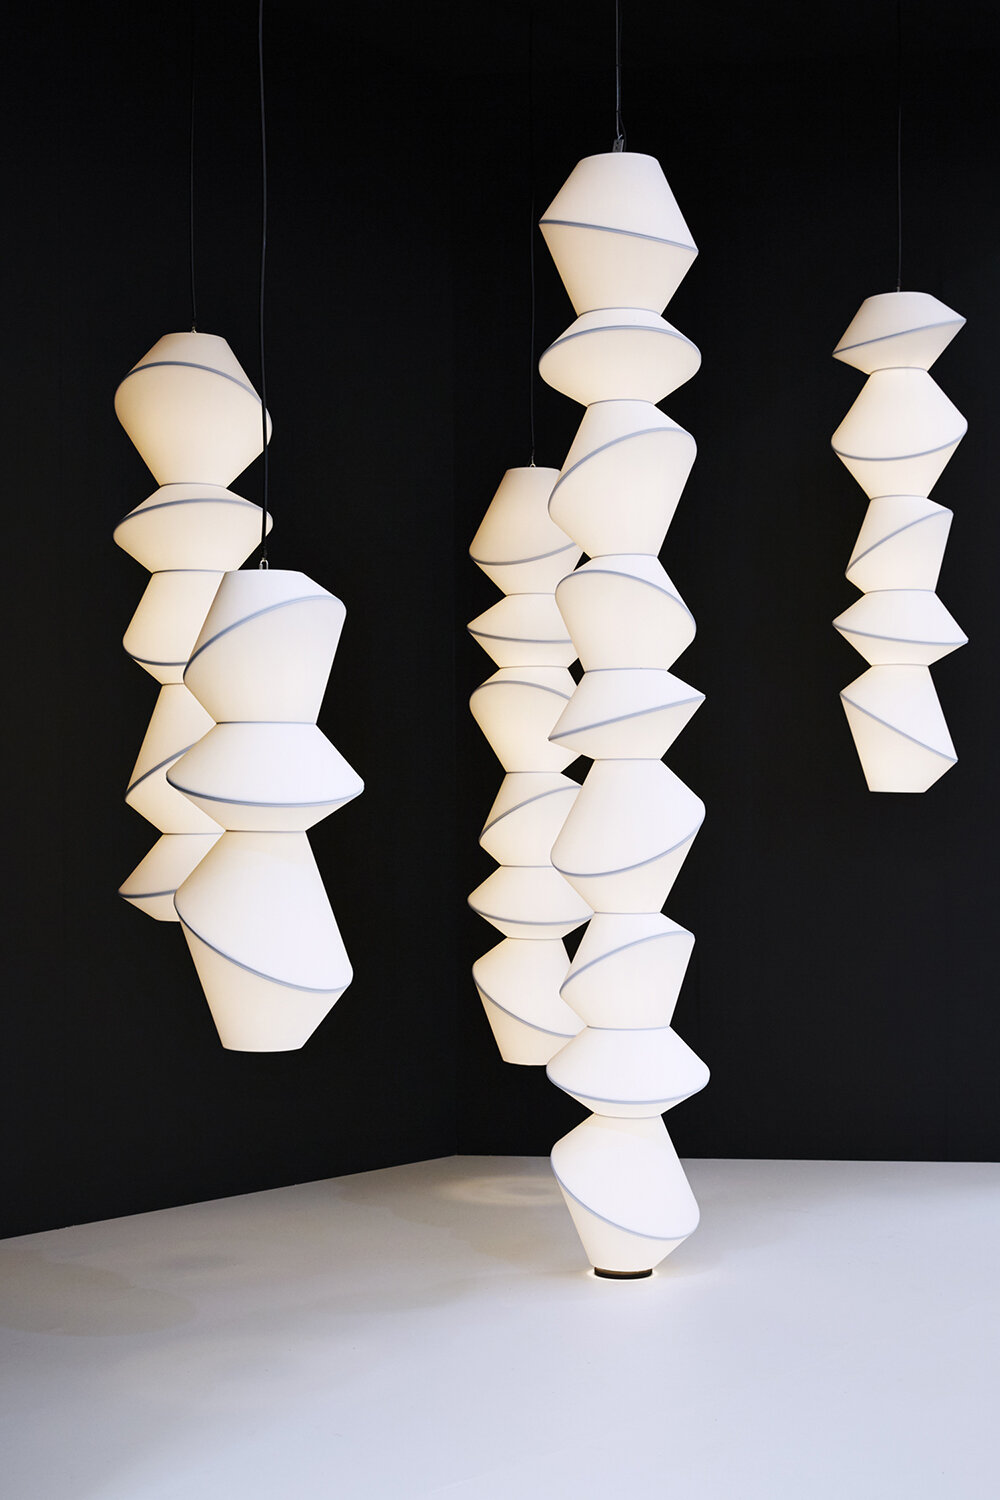 TOTEM lamps by Merel Karhof &amp; Marc Trotereau